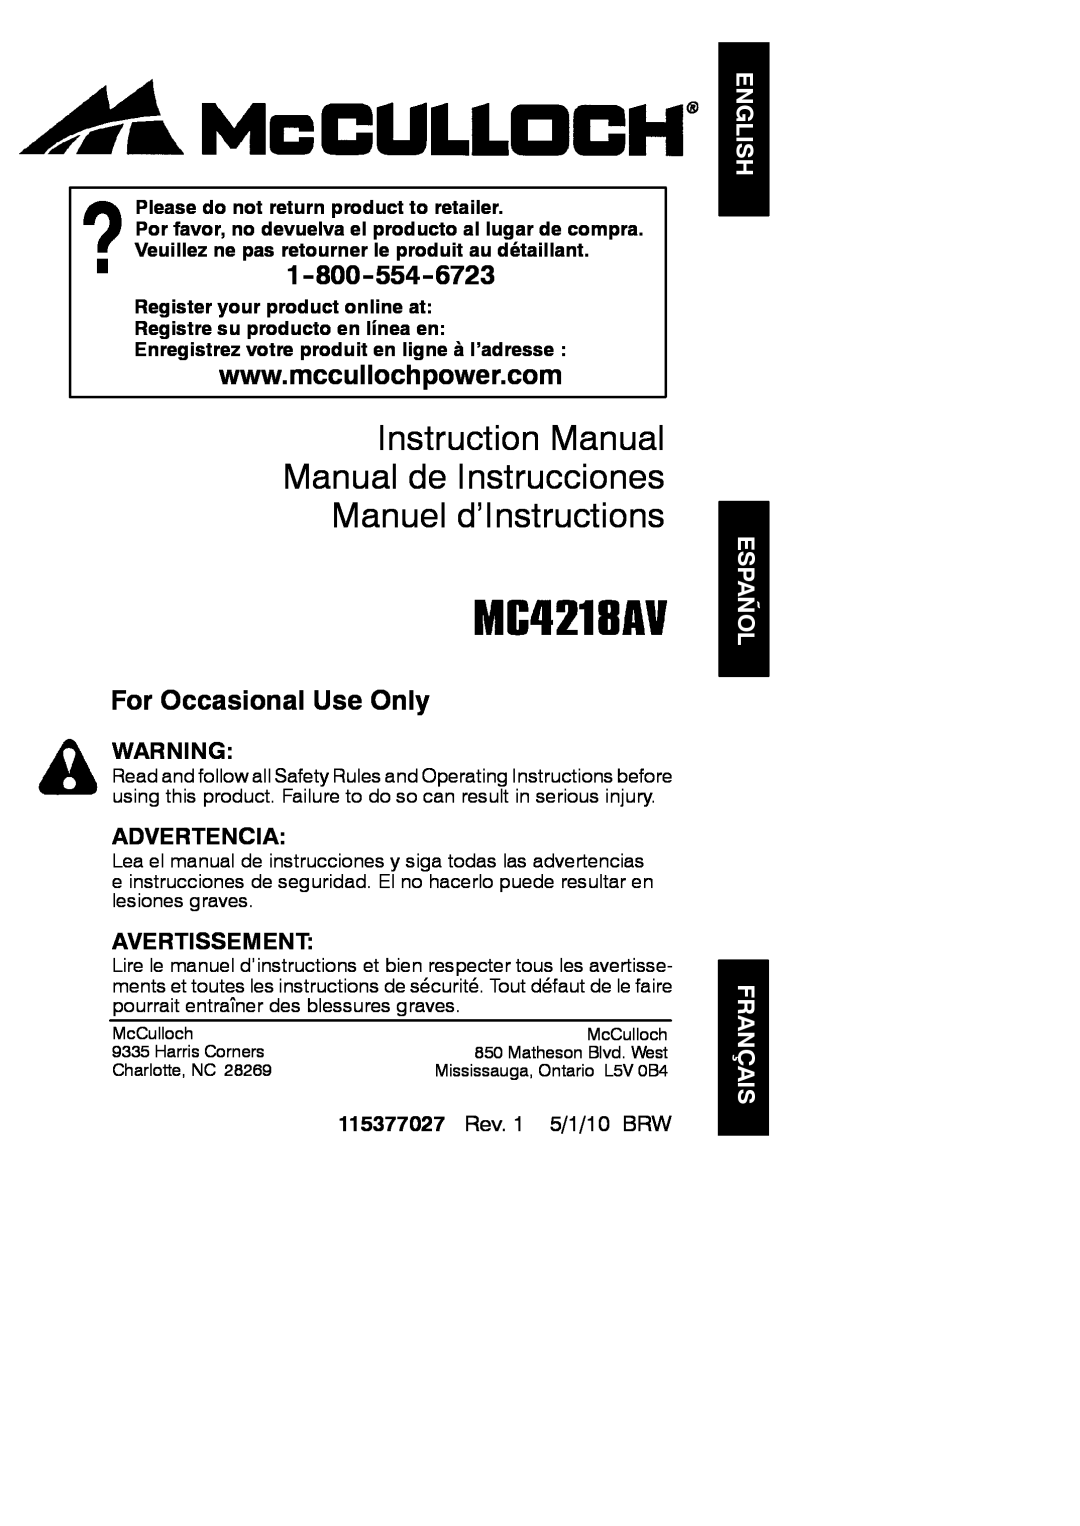 McCulloch MC4218AV instruction manual English Español Français, For Occasional Use Only, Advertencia, Avertissement 